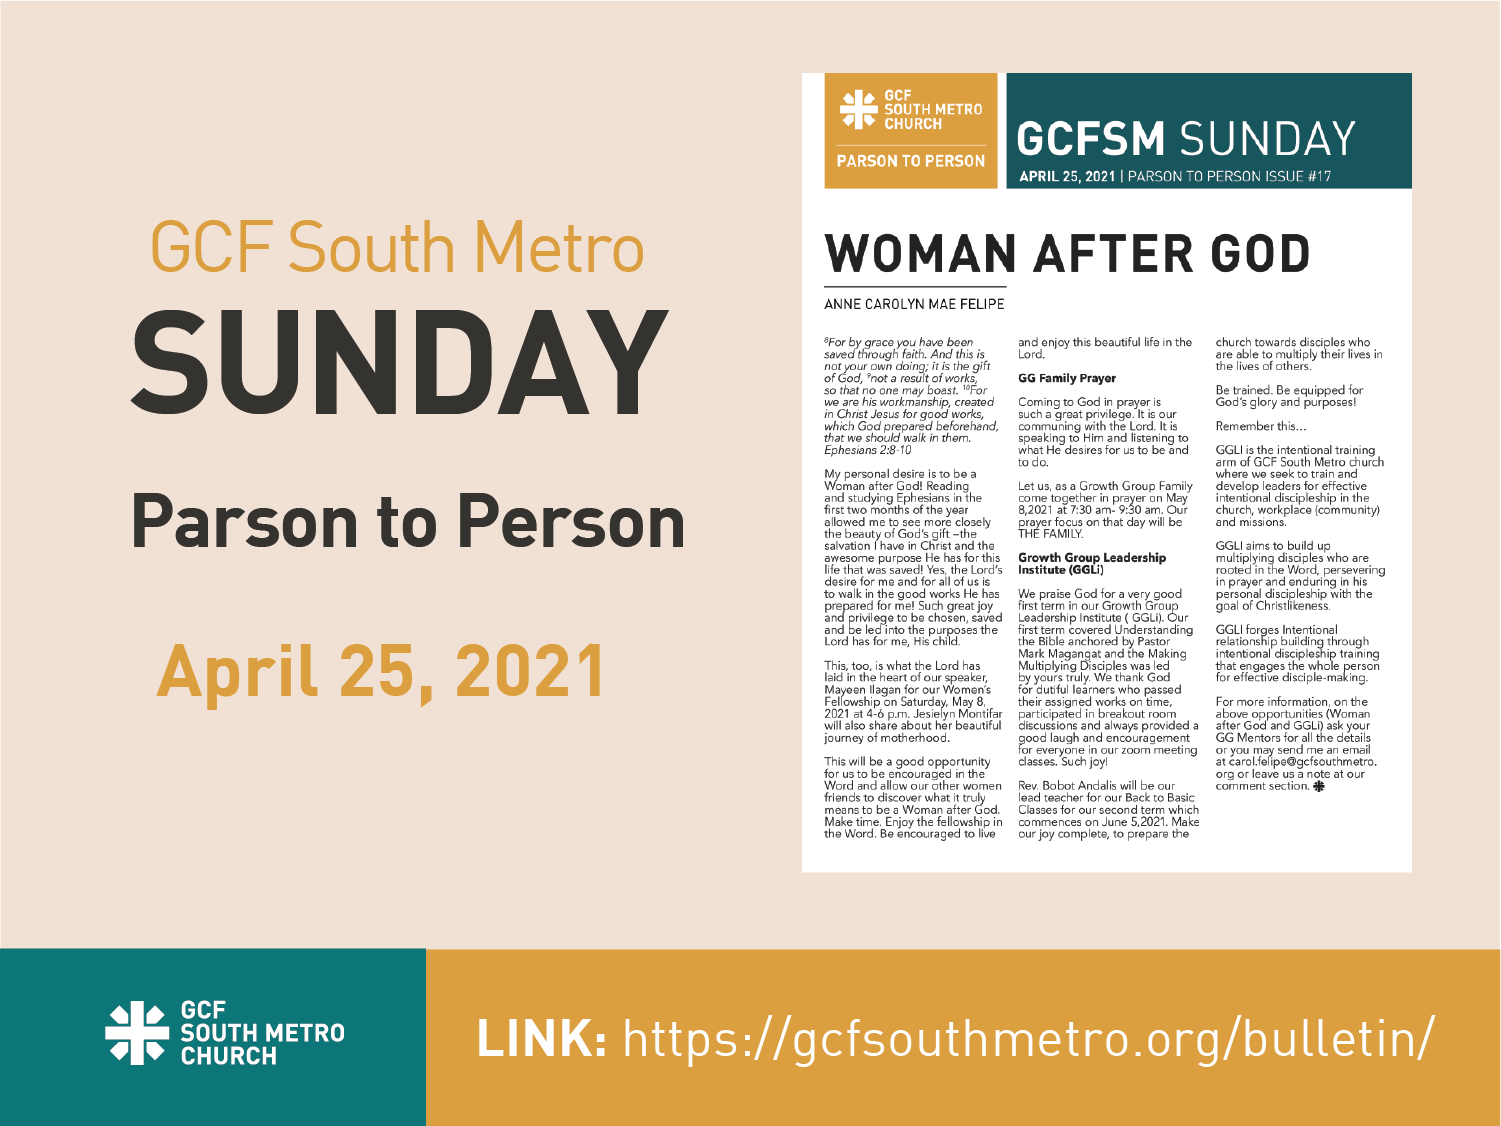 Sunday Bulletin – Parson to Person, April 25, 2021